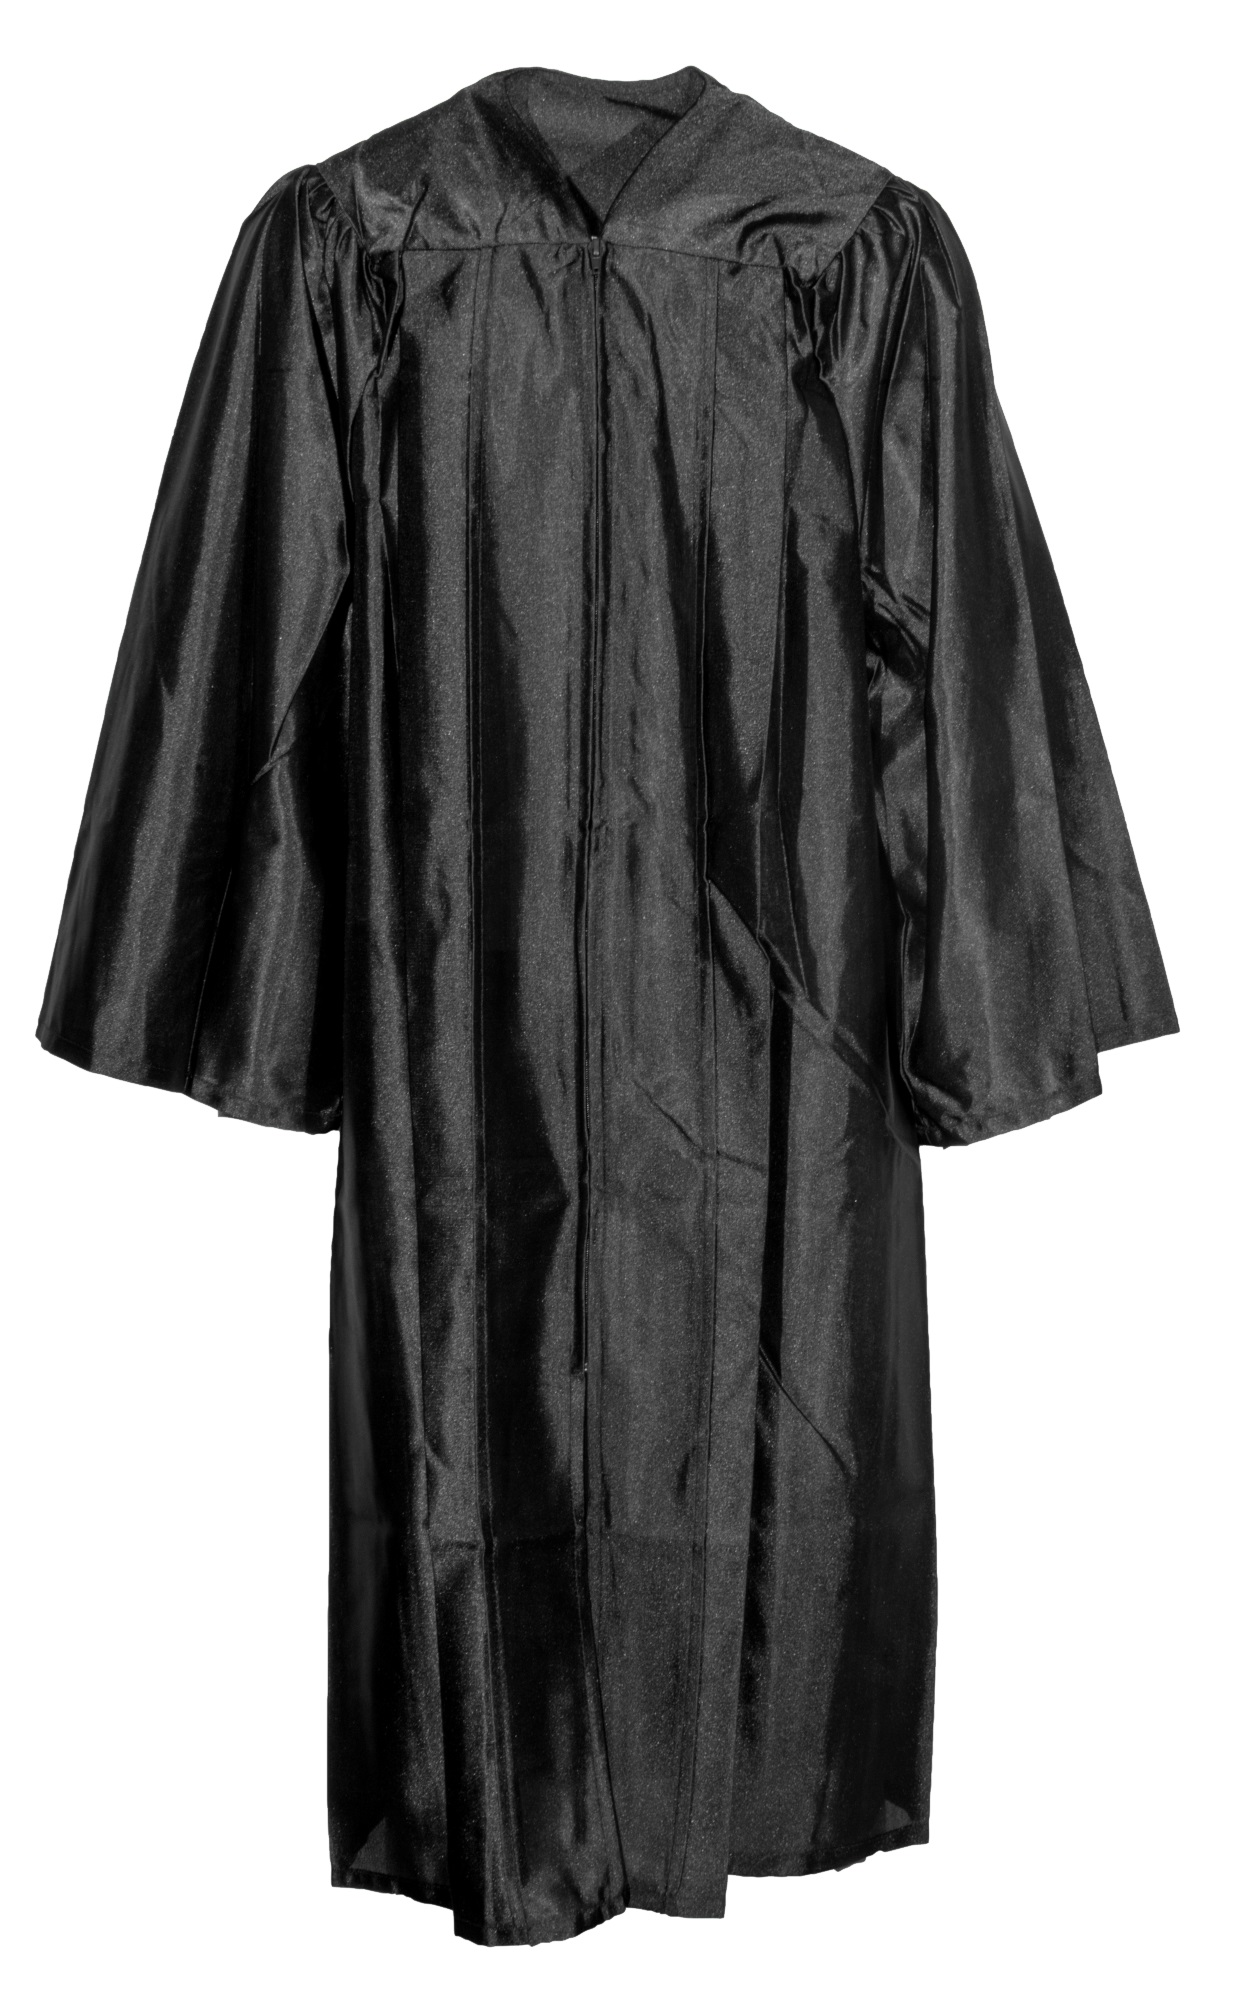 Kokott Robe "Millenium", Schwarz, Graduation Gown, Chorrobe